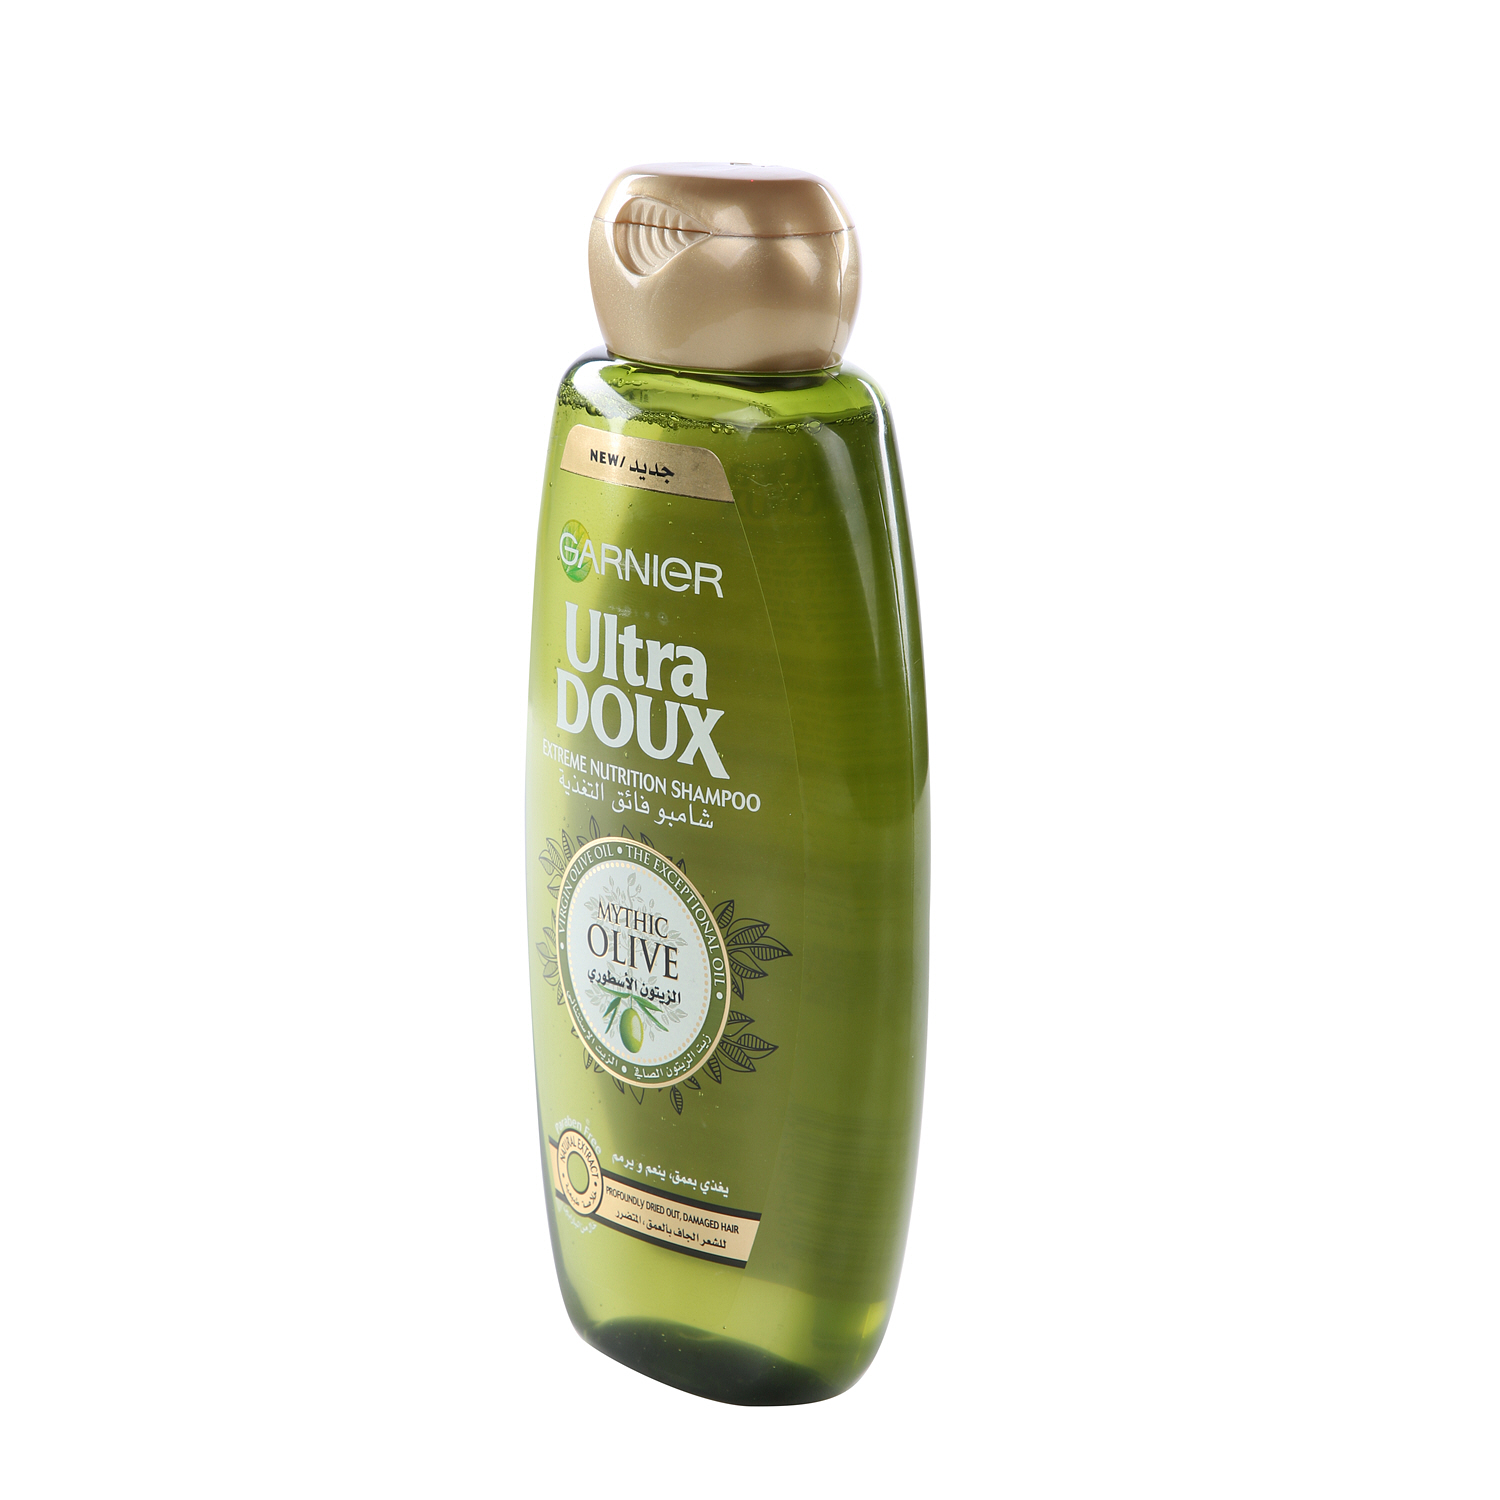 Garnier ULtra Doux Olive Mythique Shampoo 400ml